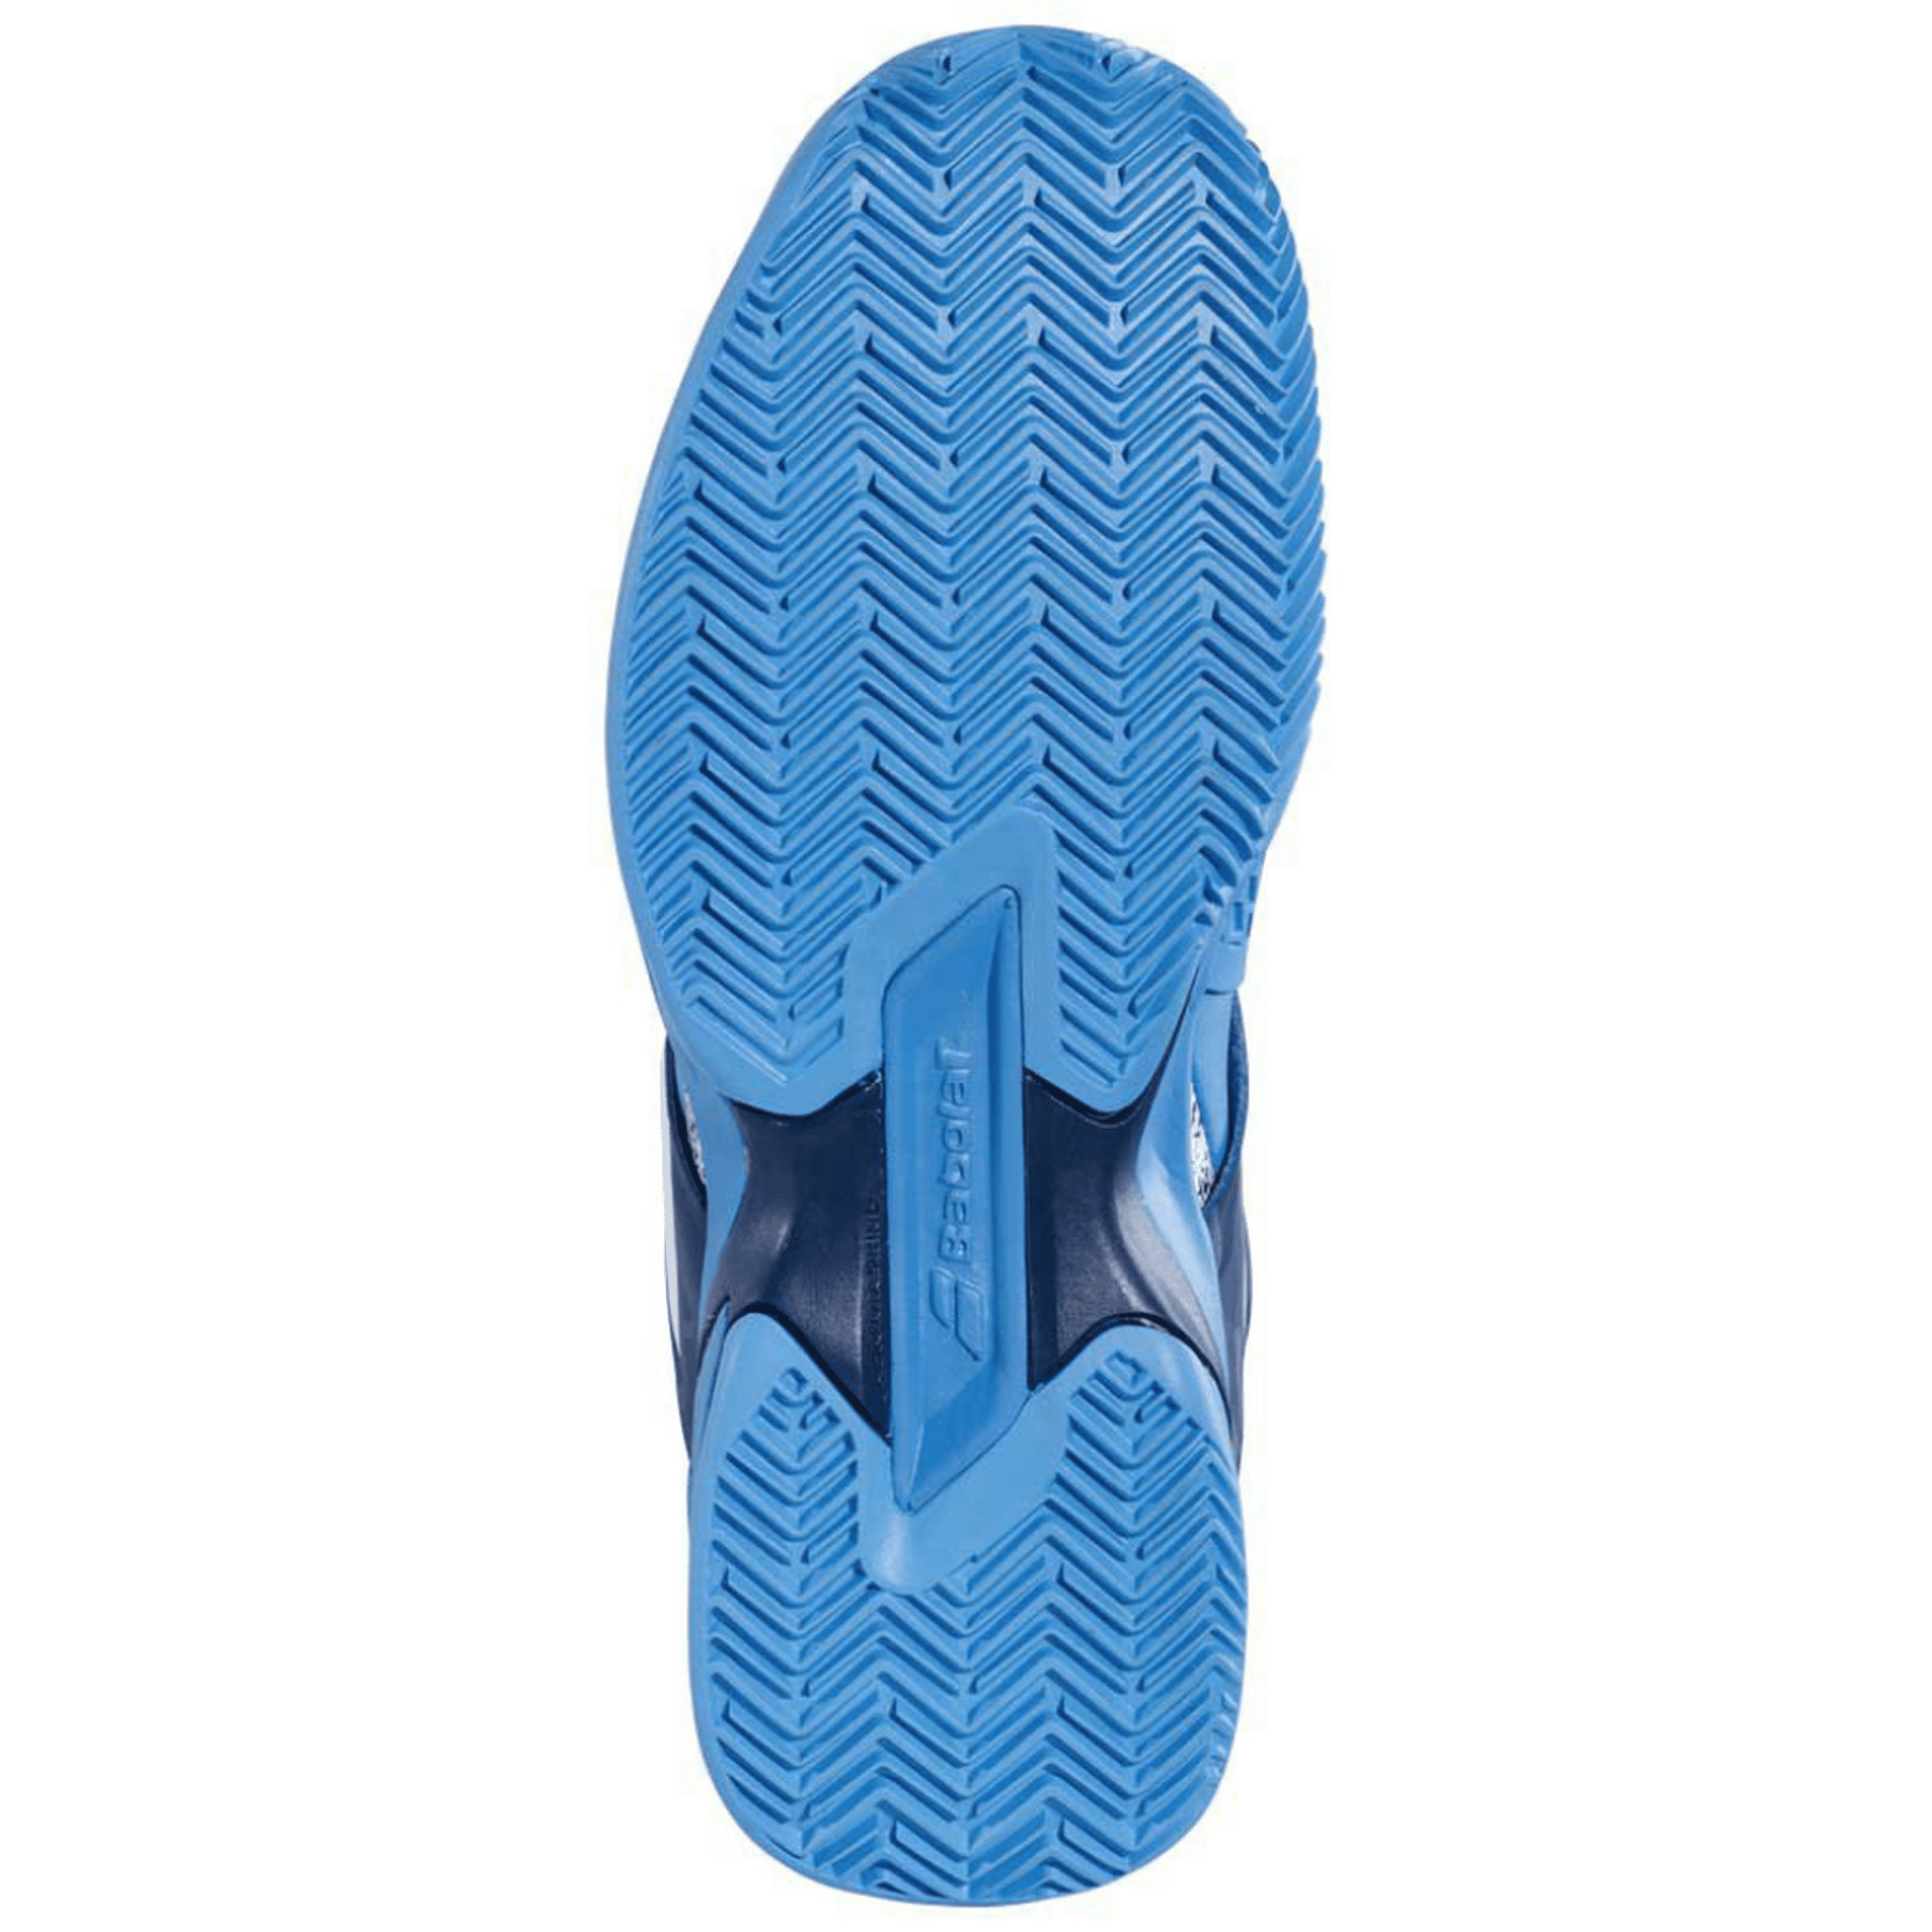 Babolat Propulse Clay Junior Tennis Shoes - Drive Blue